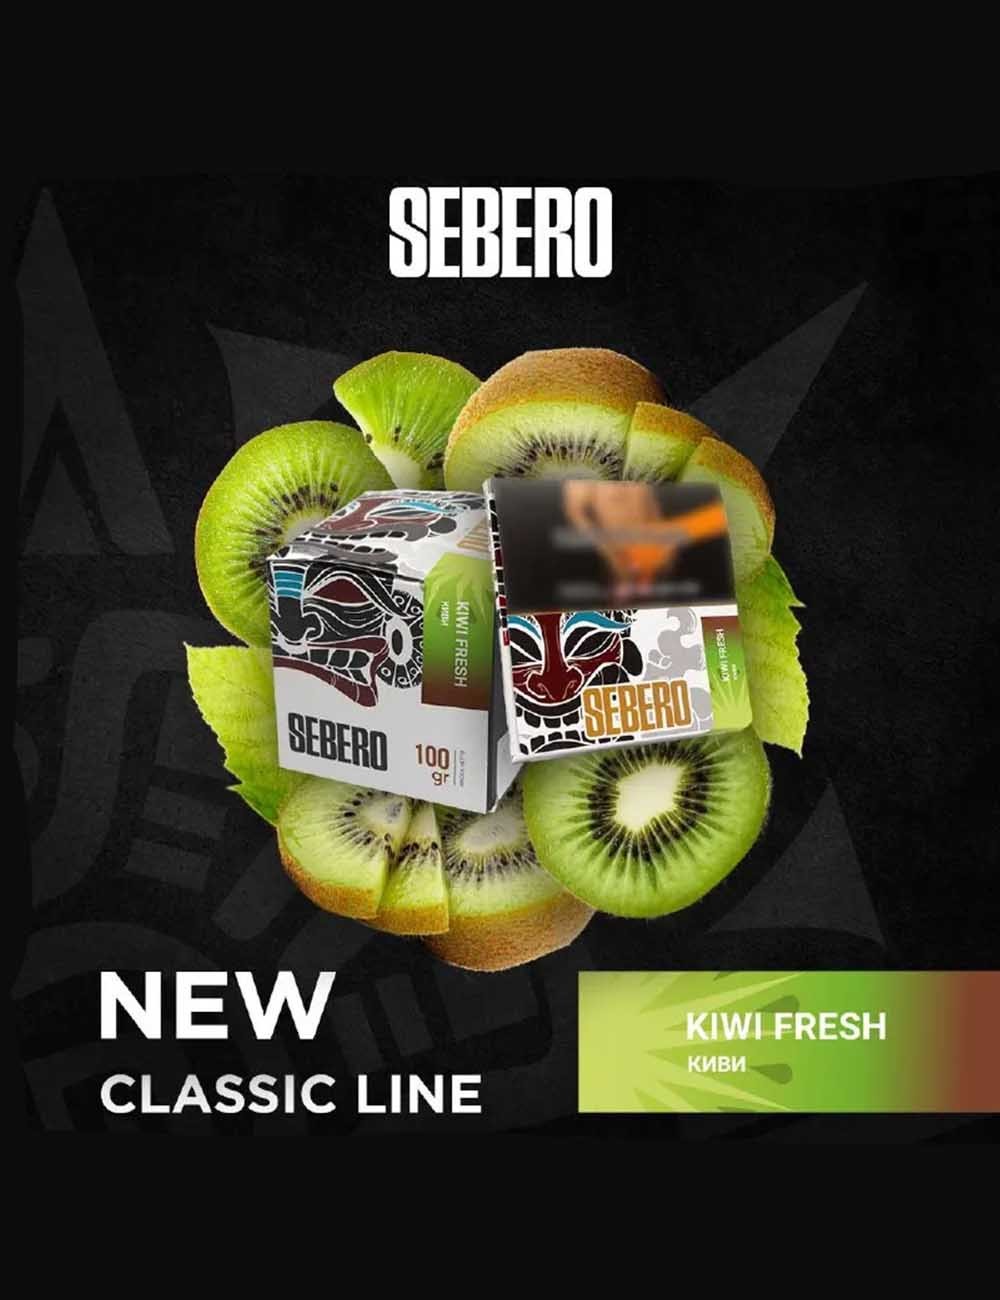 Sebero Kiwi Fresh (Kwi Frs)